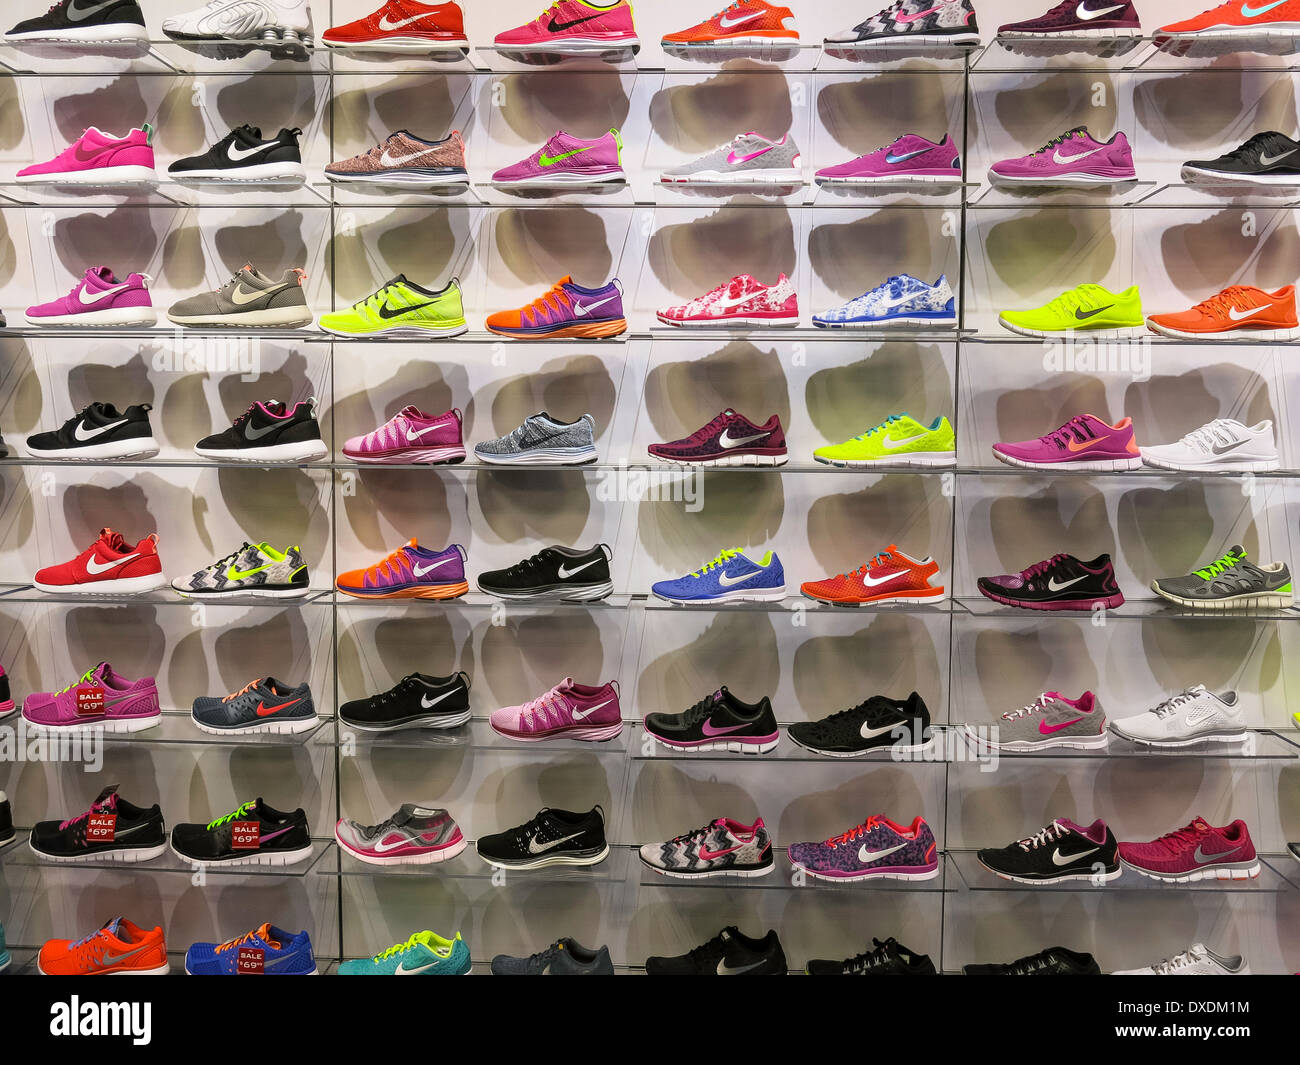 Nike Athletic Shoe Wall, Foot Locker, International Plaza, Tampa, FL, USA  Stock Photo - Alamy